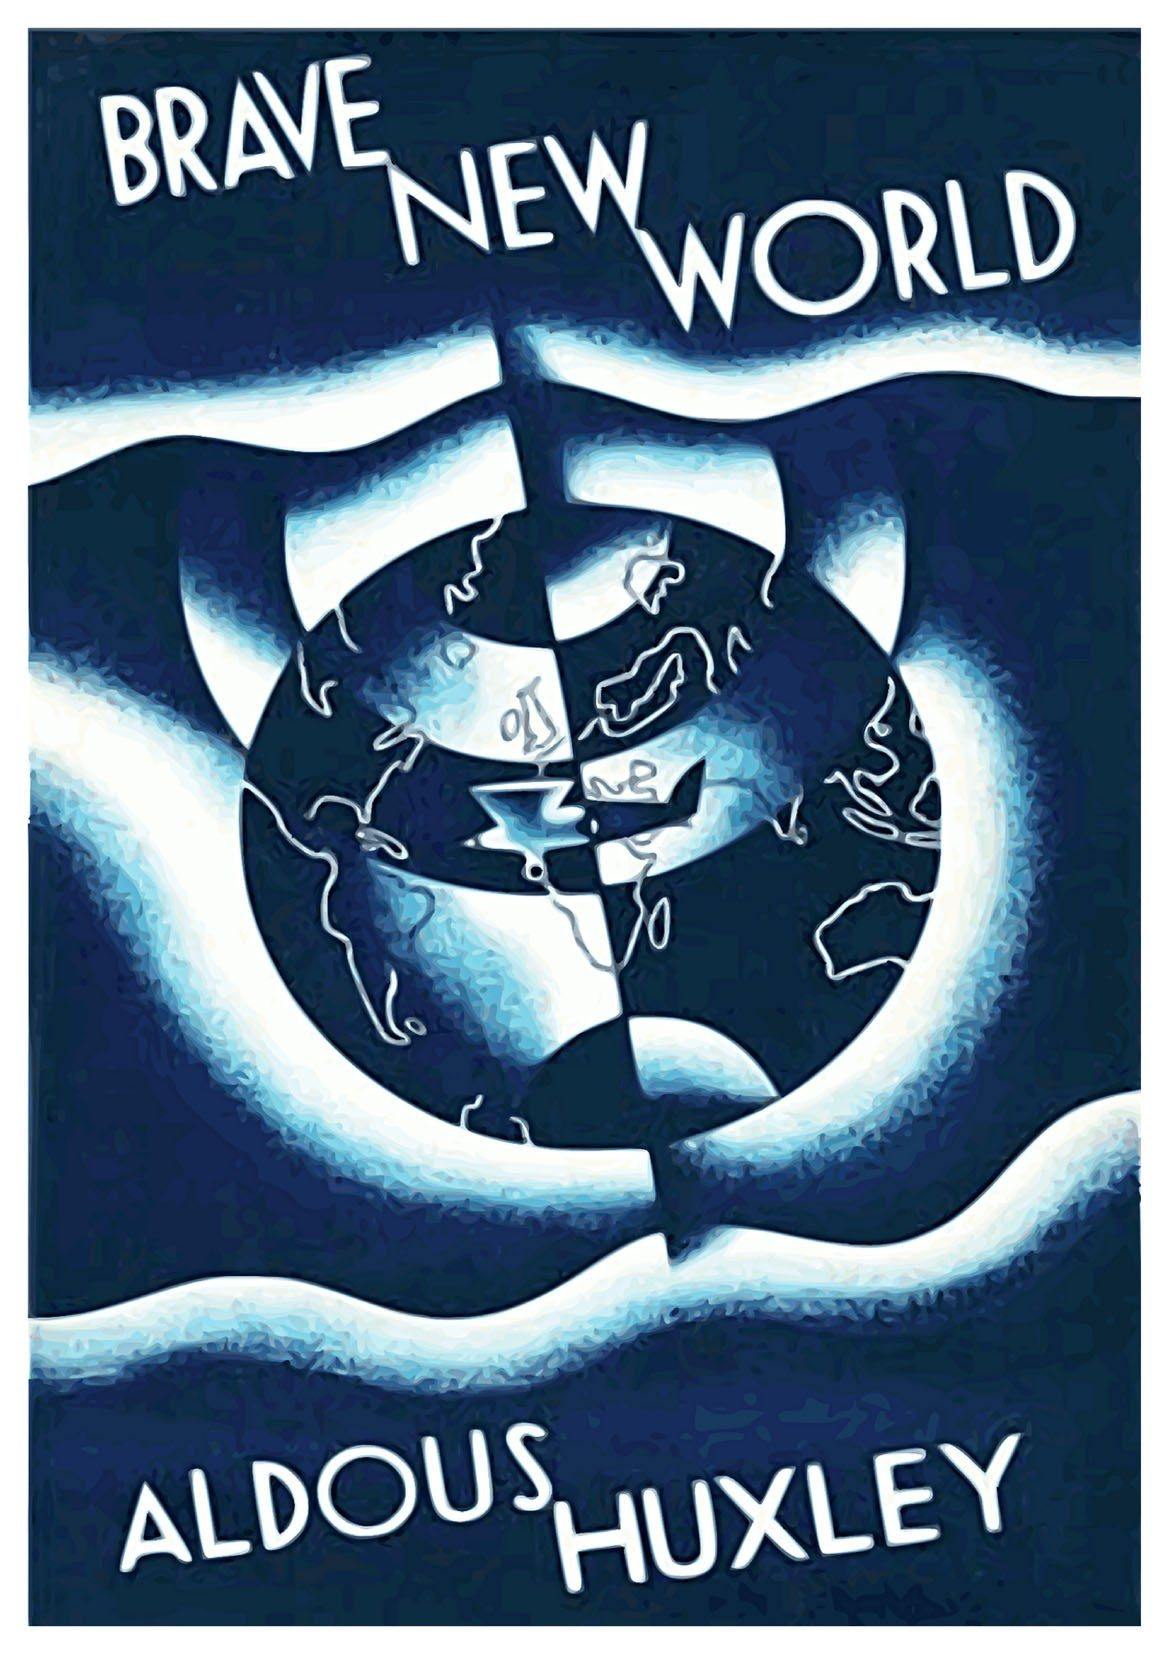 BRAVE NEW WORLD POSTER: Vintage Book Cover Art Print - Pimlico Prints